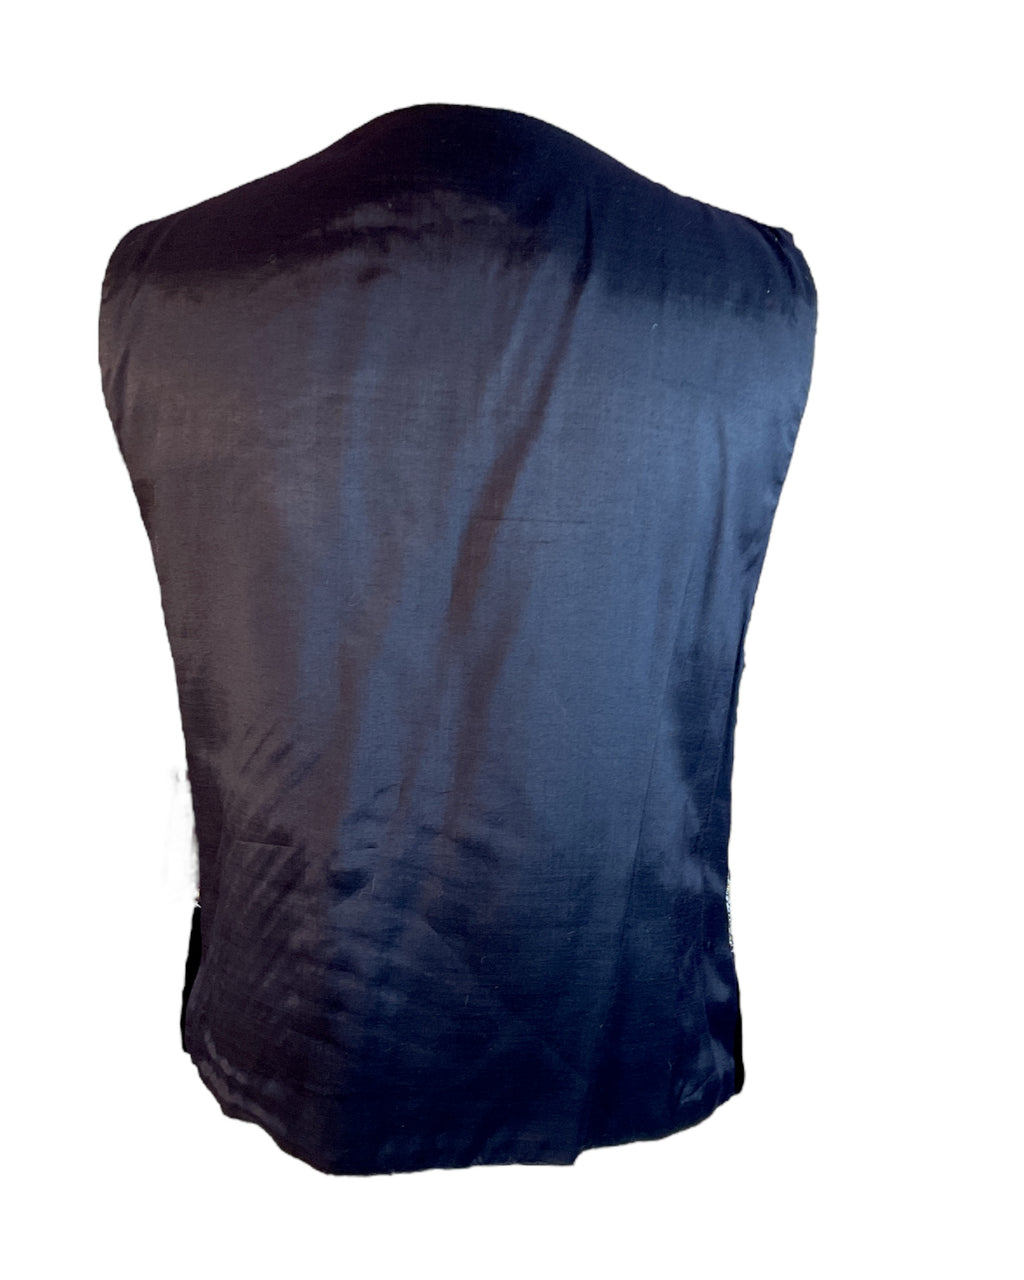 Black Kikomo Patchwork Vest, M